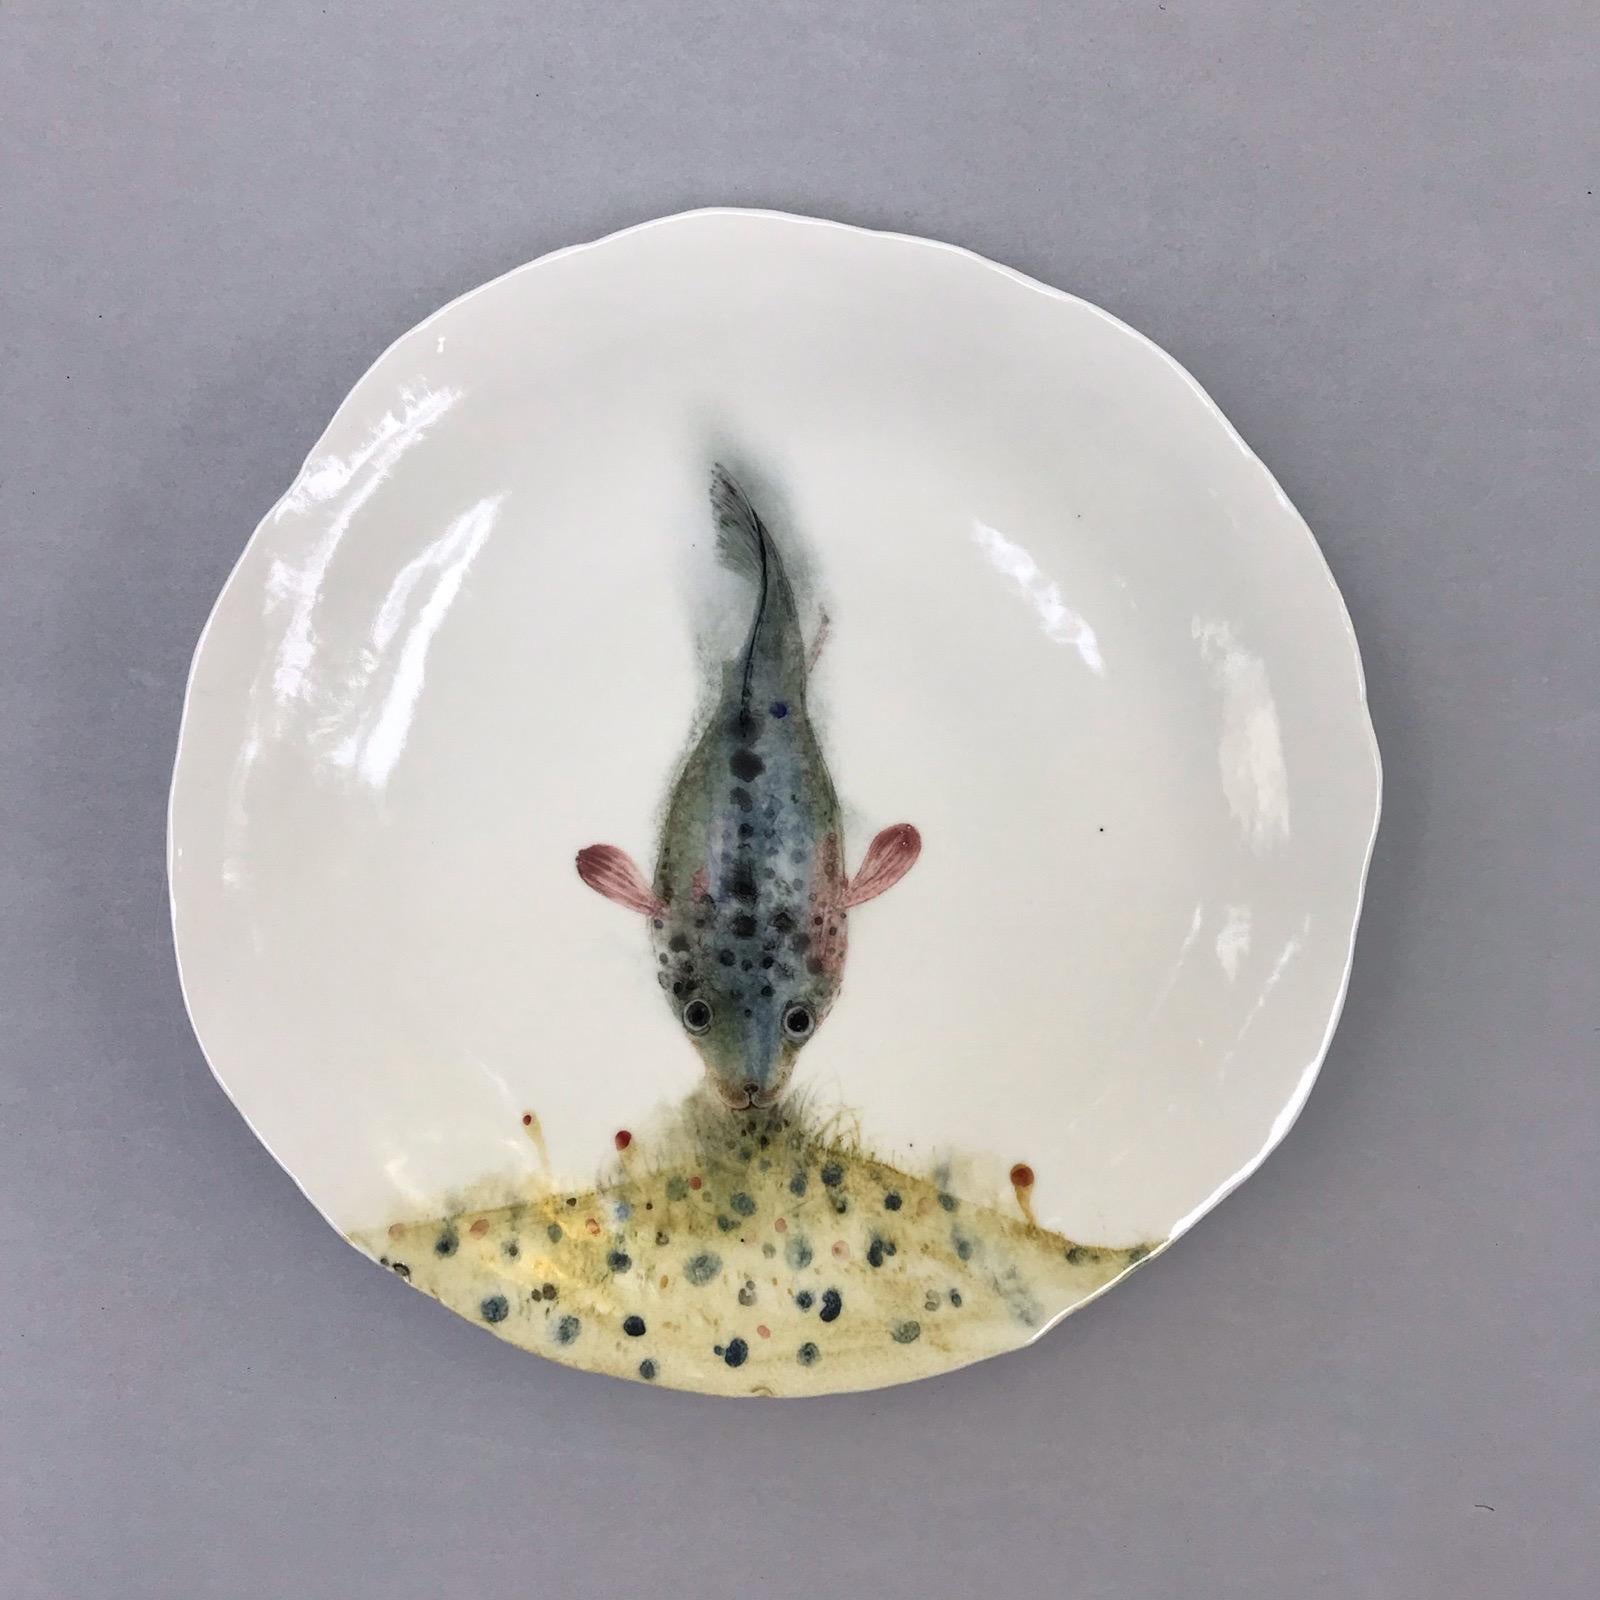 XUE SUN 2018 - Unique enameled ceramic wall platter or center plate. Measures: 29 cm diameter

XUE SUN - Born in Shandong -China
Exhibtion
2018 
Xue Sun 